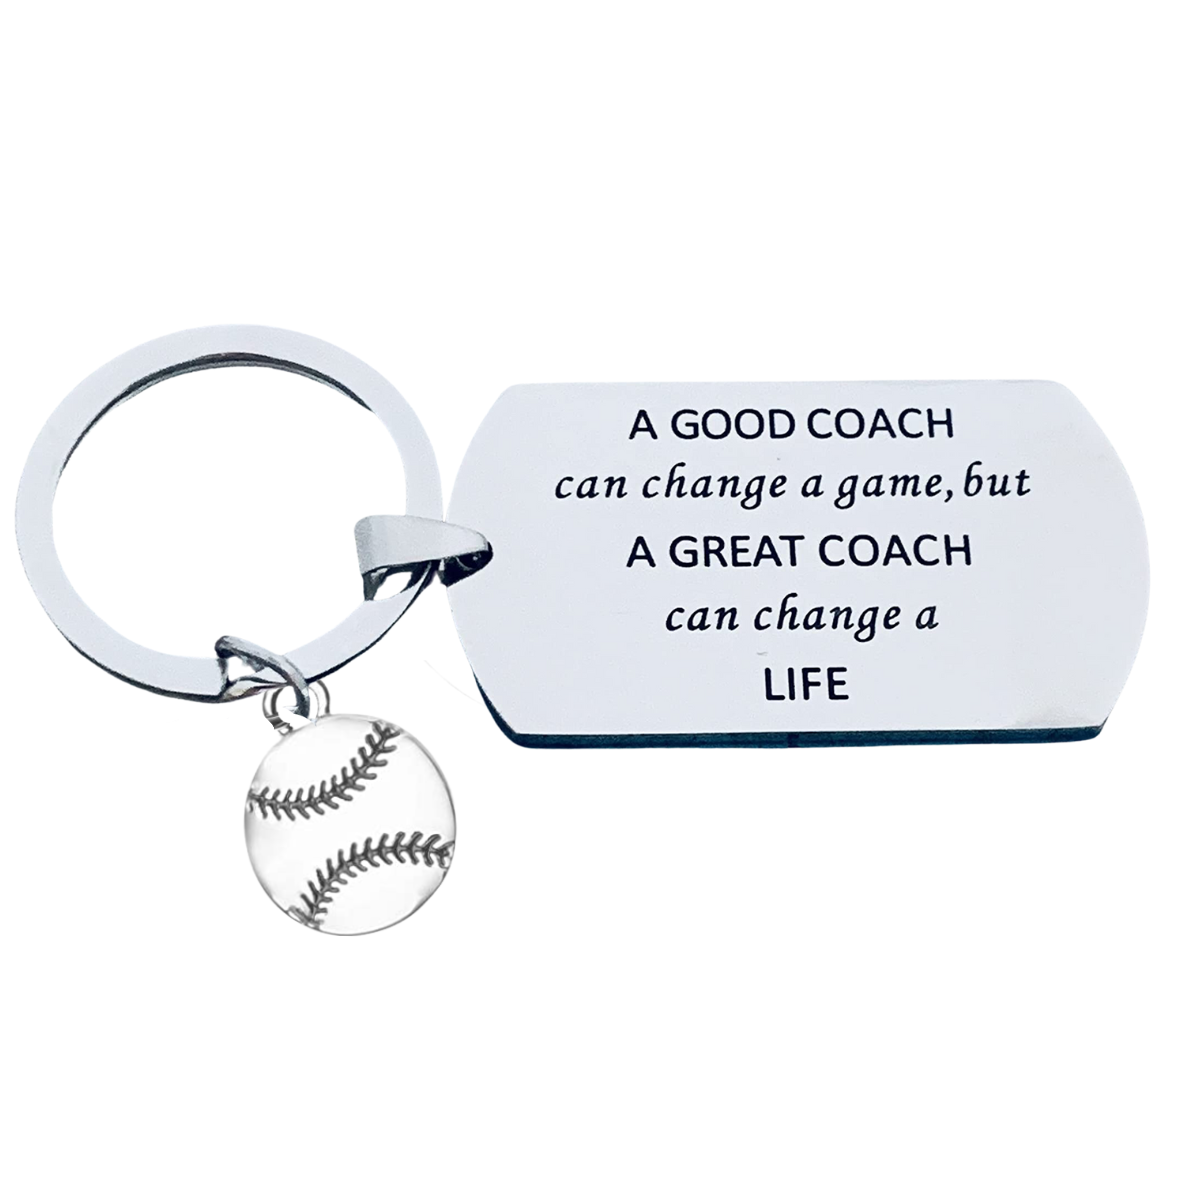 oftball Coach Keychain- A Good Coach Can Change a Game, But a Great Coach Can Change a Life